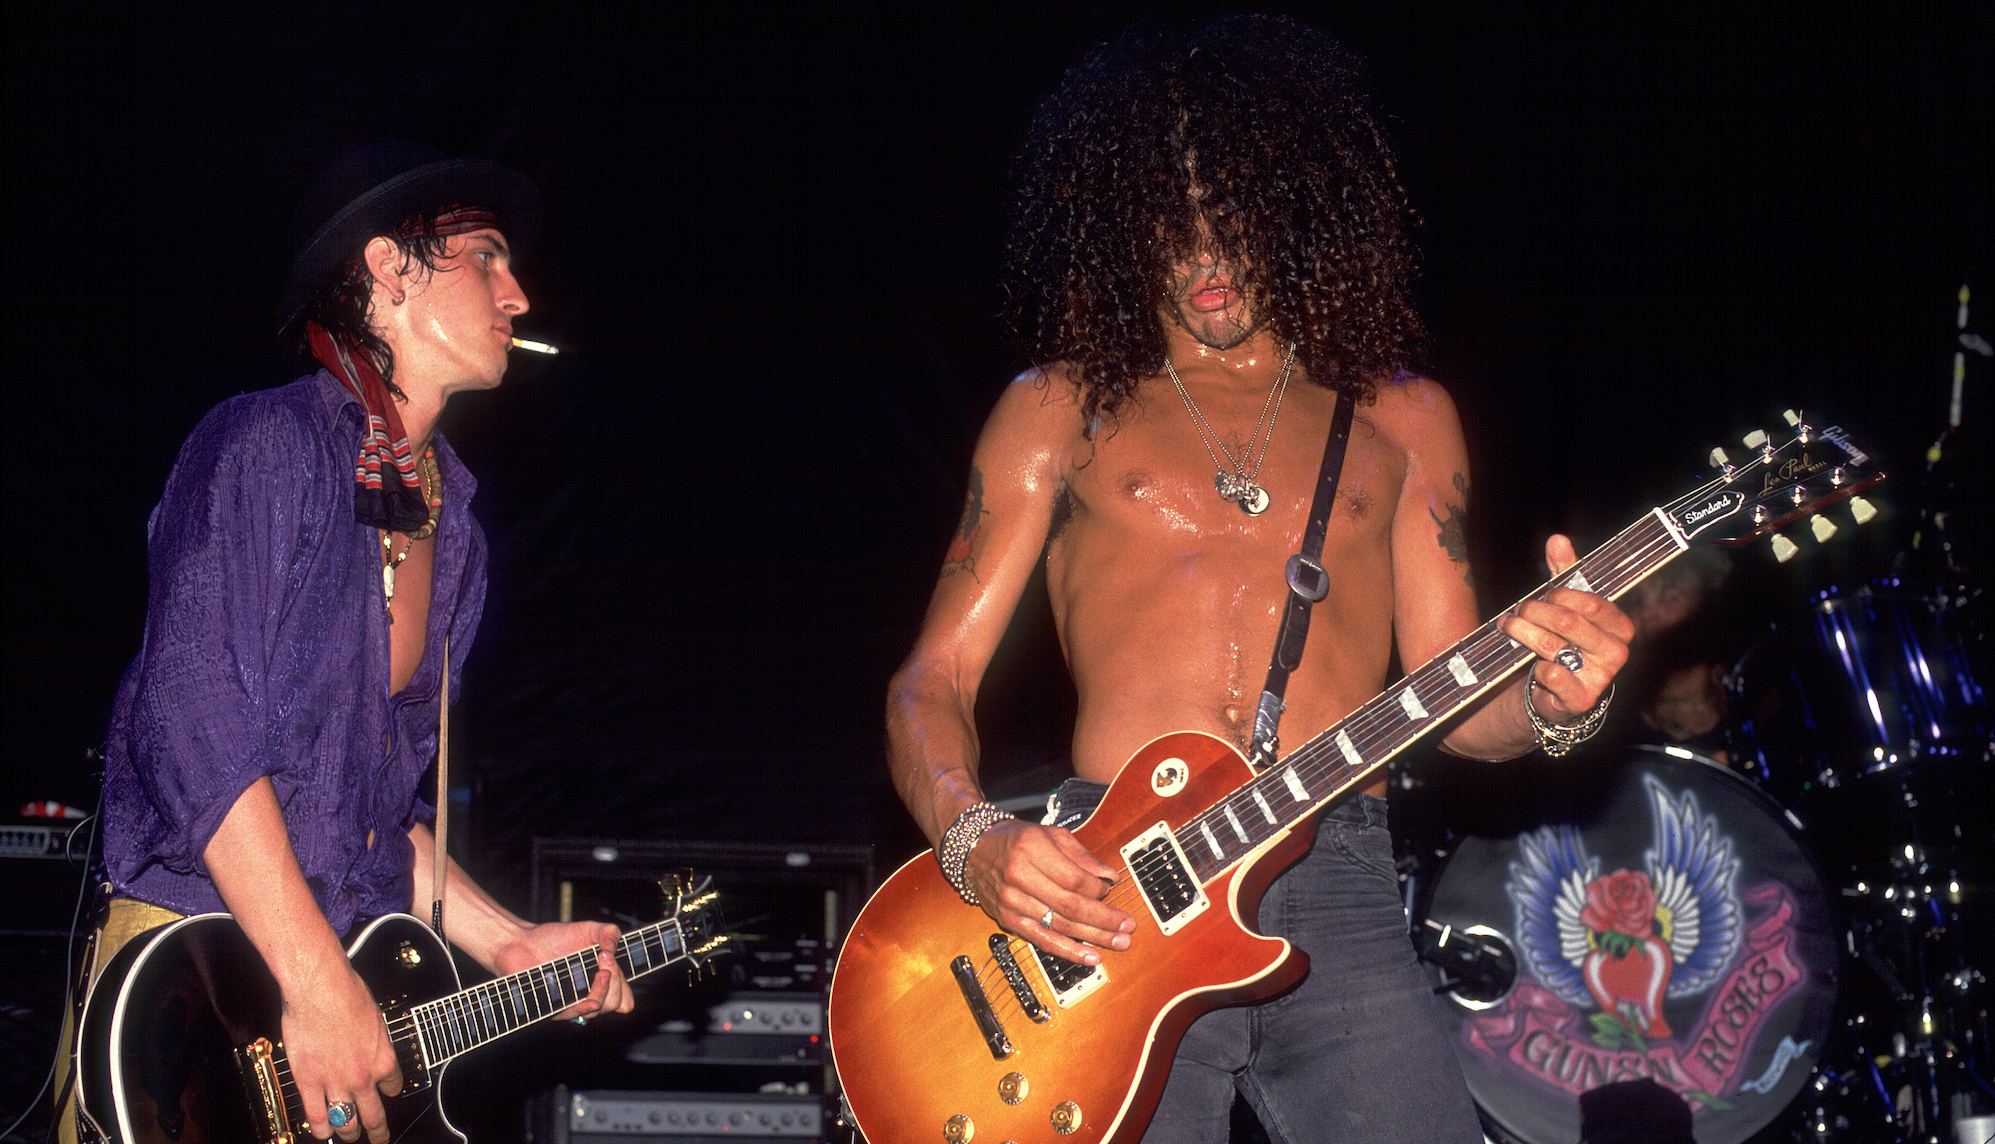 The first album that Guns N' Roses guitarist Slash bought